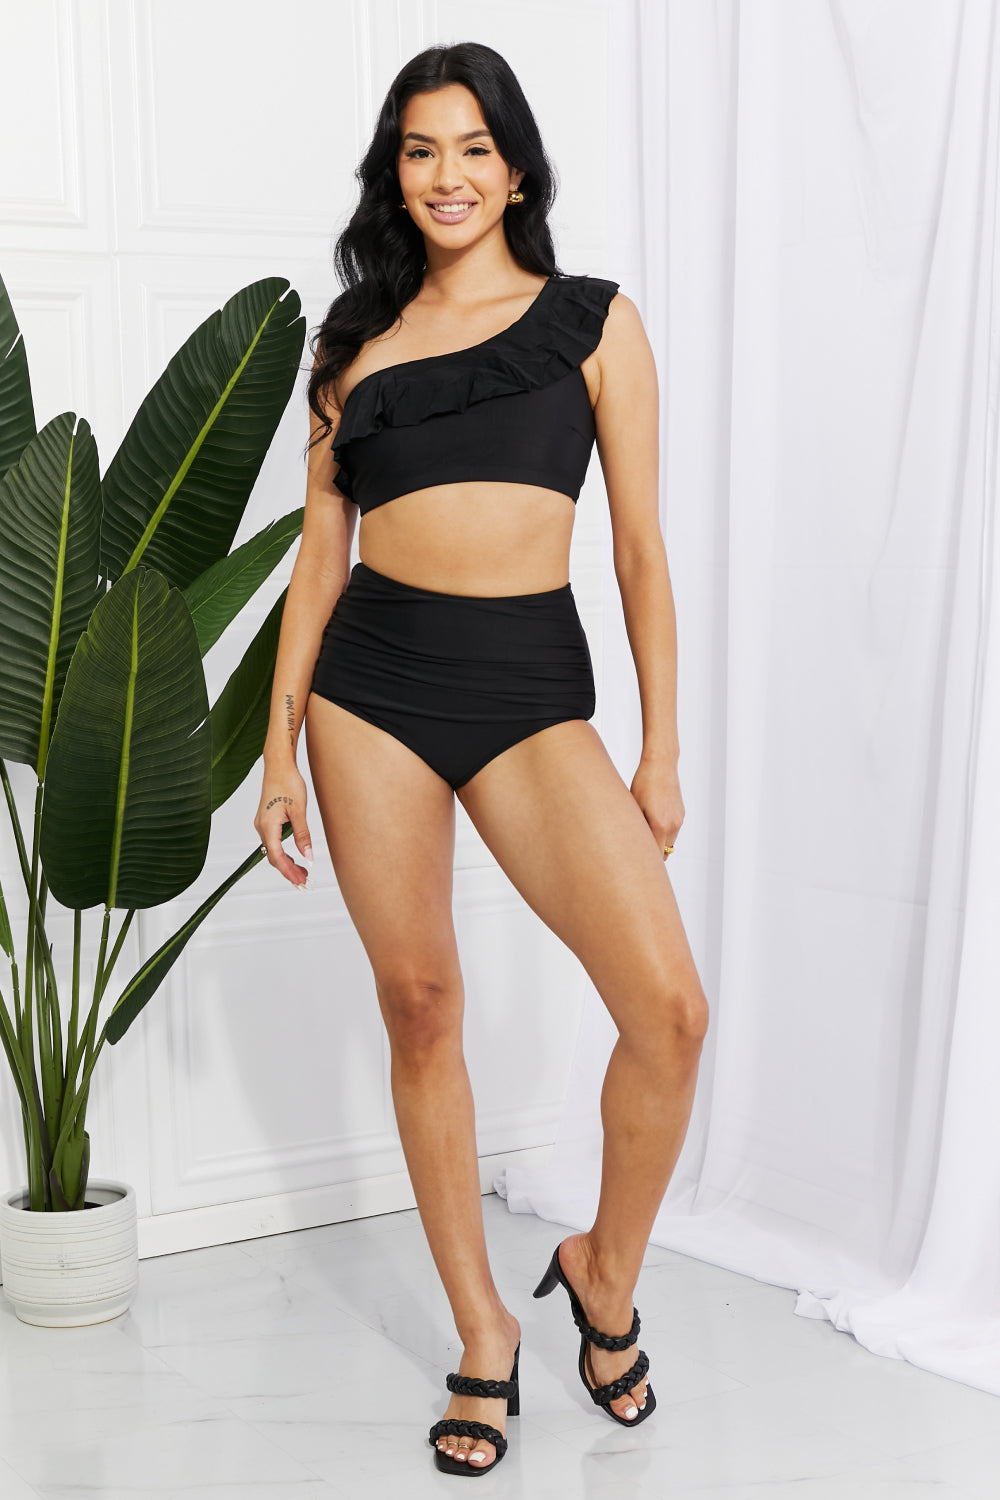 Marina West Swim Seaside Romance Ruffle One-Shoulder Bikini in Black - Bikinis & Tankinis - FITGGINS